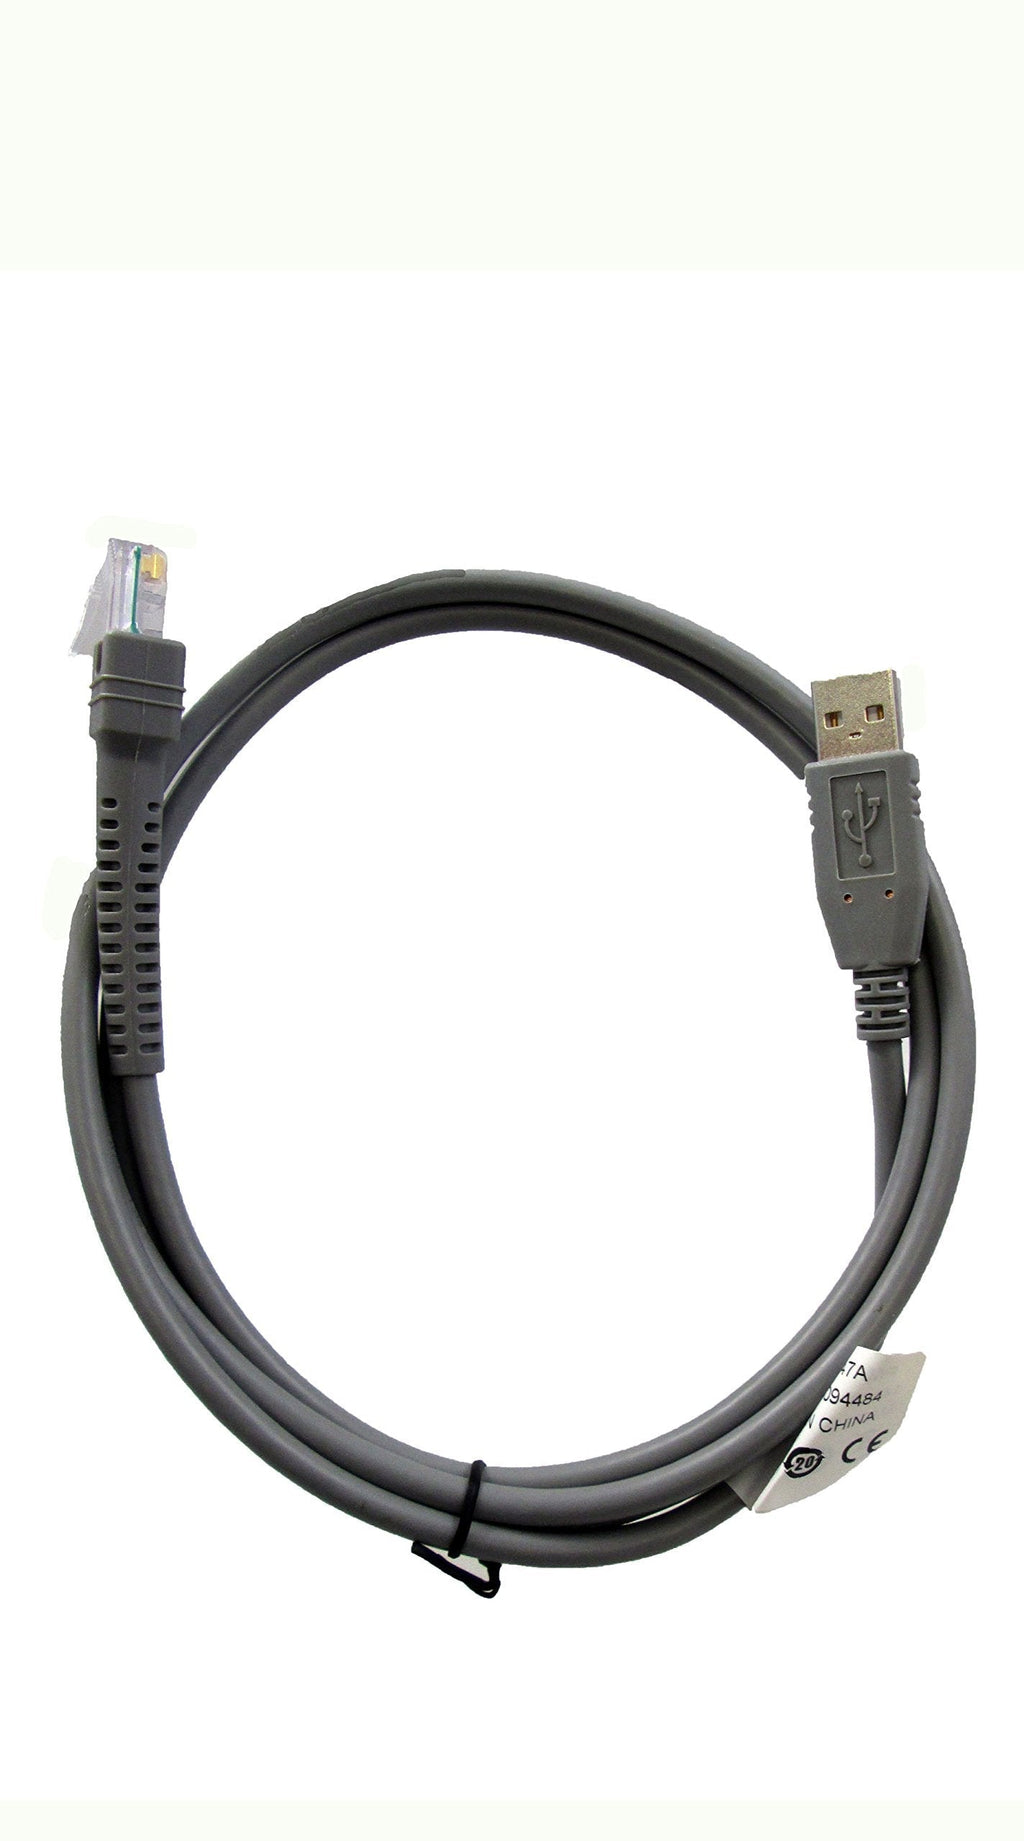  [AUSTRALIA] - Motorola OEM USB Programming Cable MotoTRBO PMKN4147A CM200D CM300D XPR2500